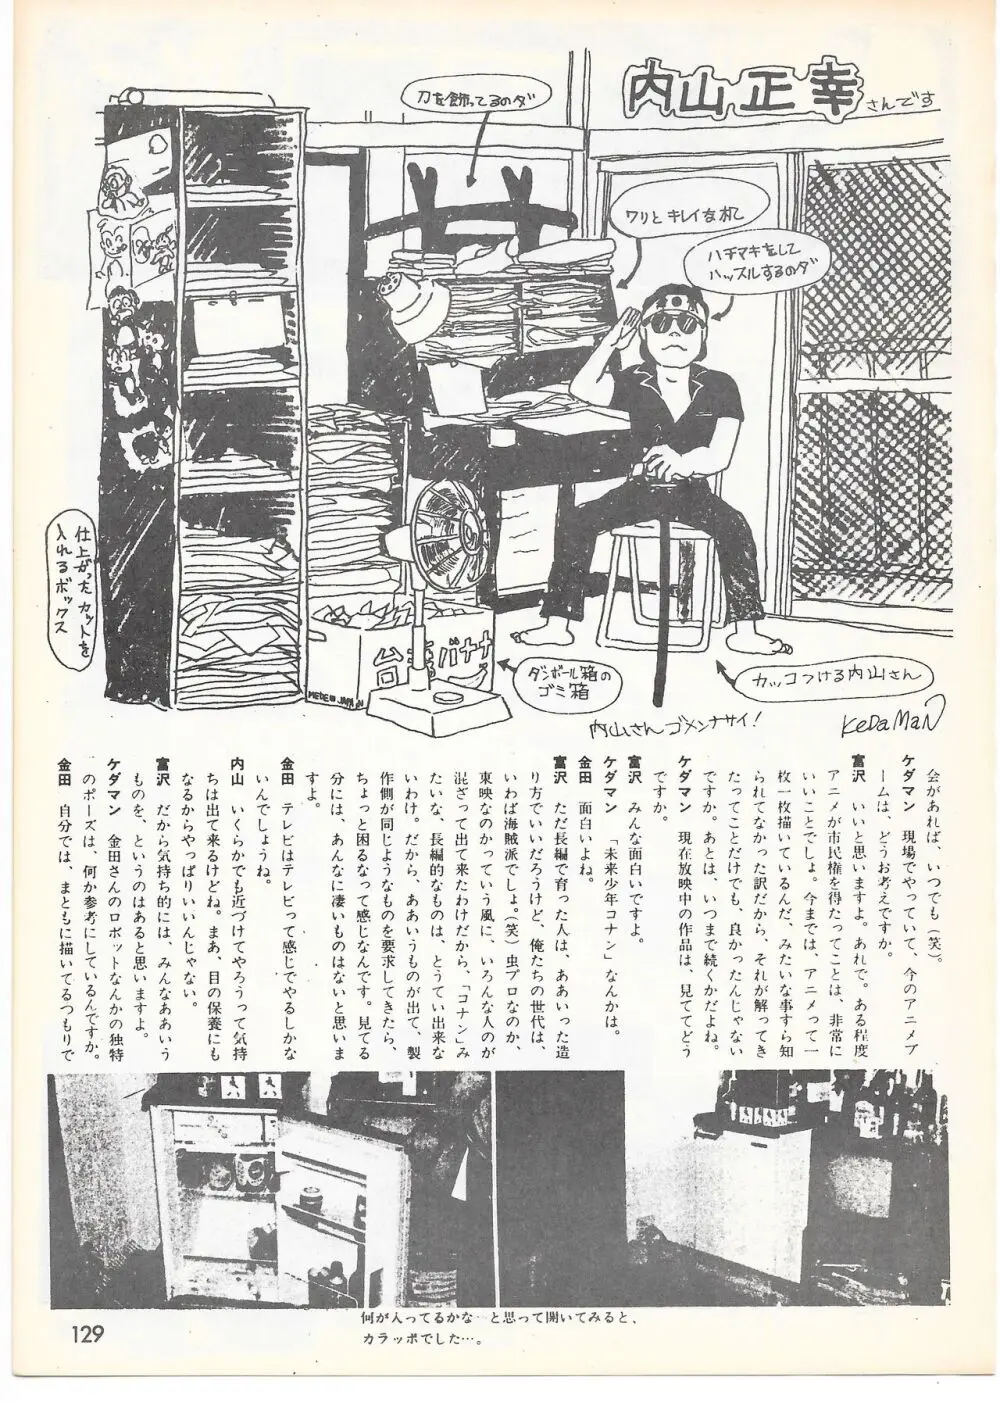 THE ANIMATOR 1 金田伊功特集号 - page124